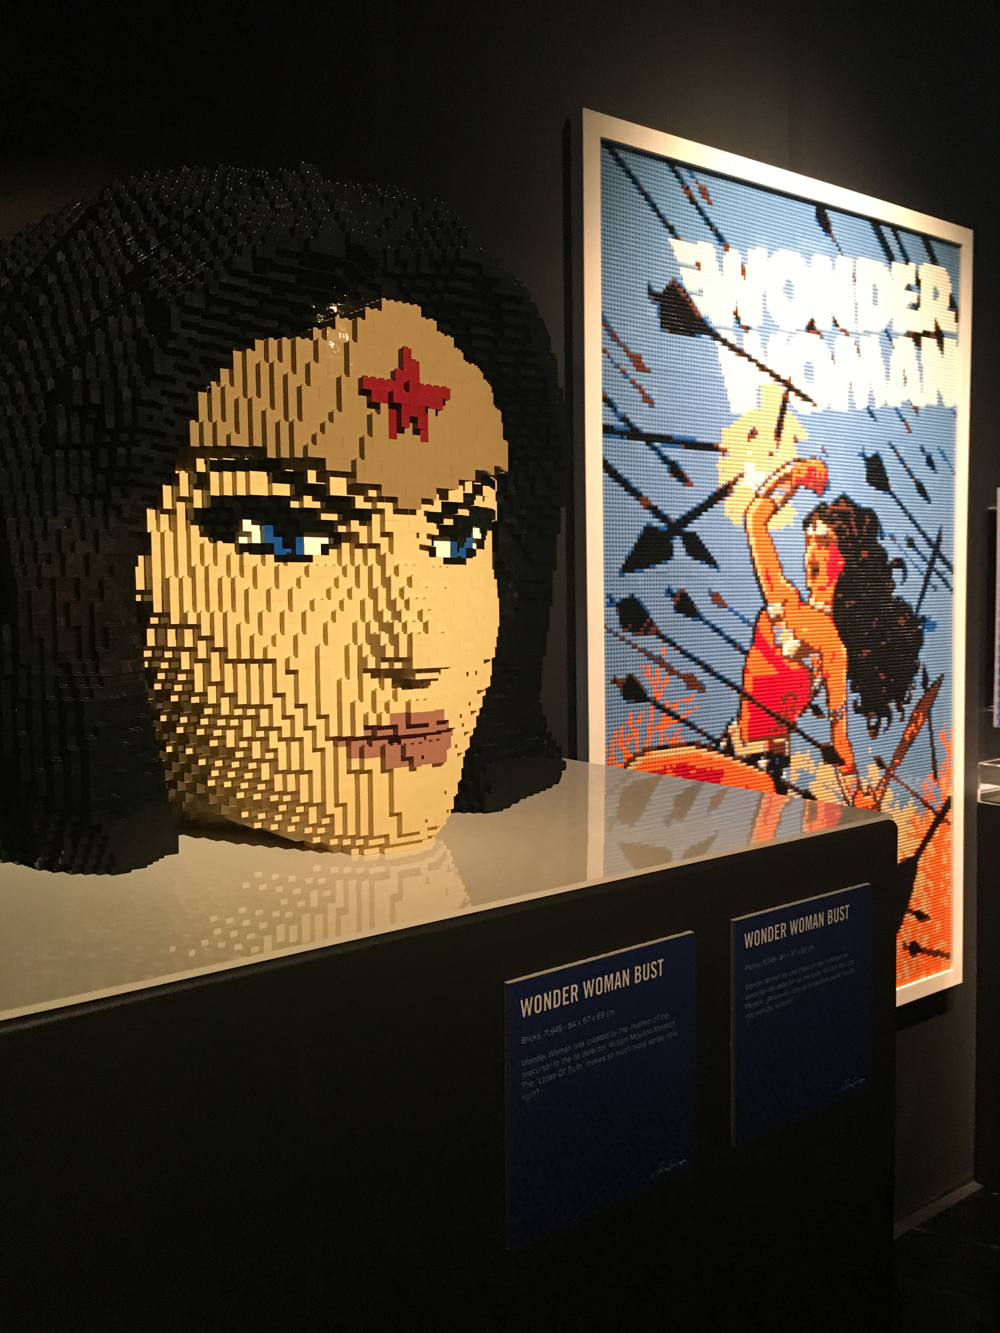 The Art of Brick: DC Superheroes - Lego - MAdrid -Nathan Sawaya -Colon